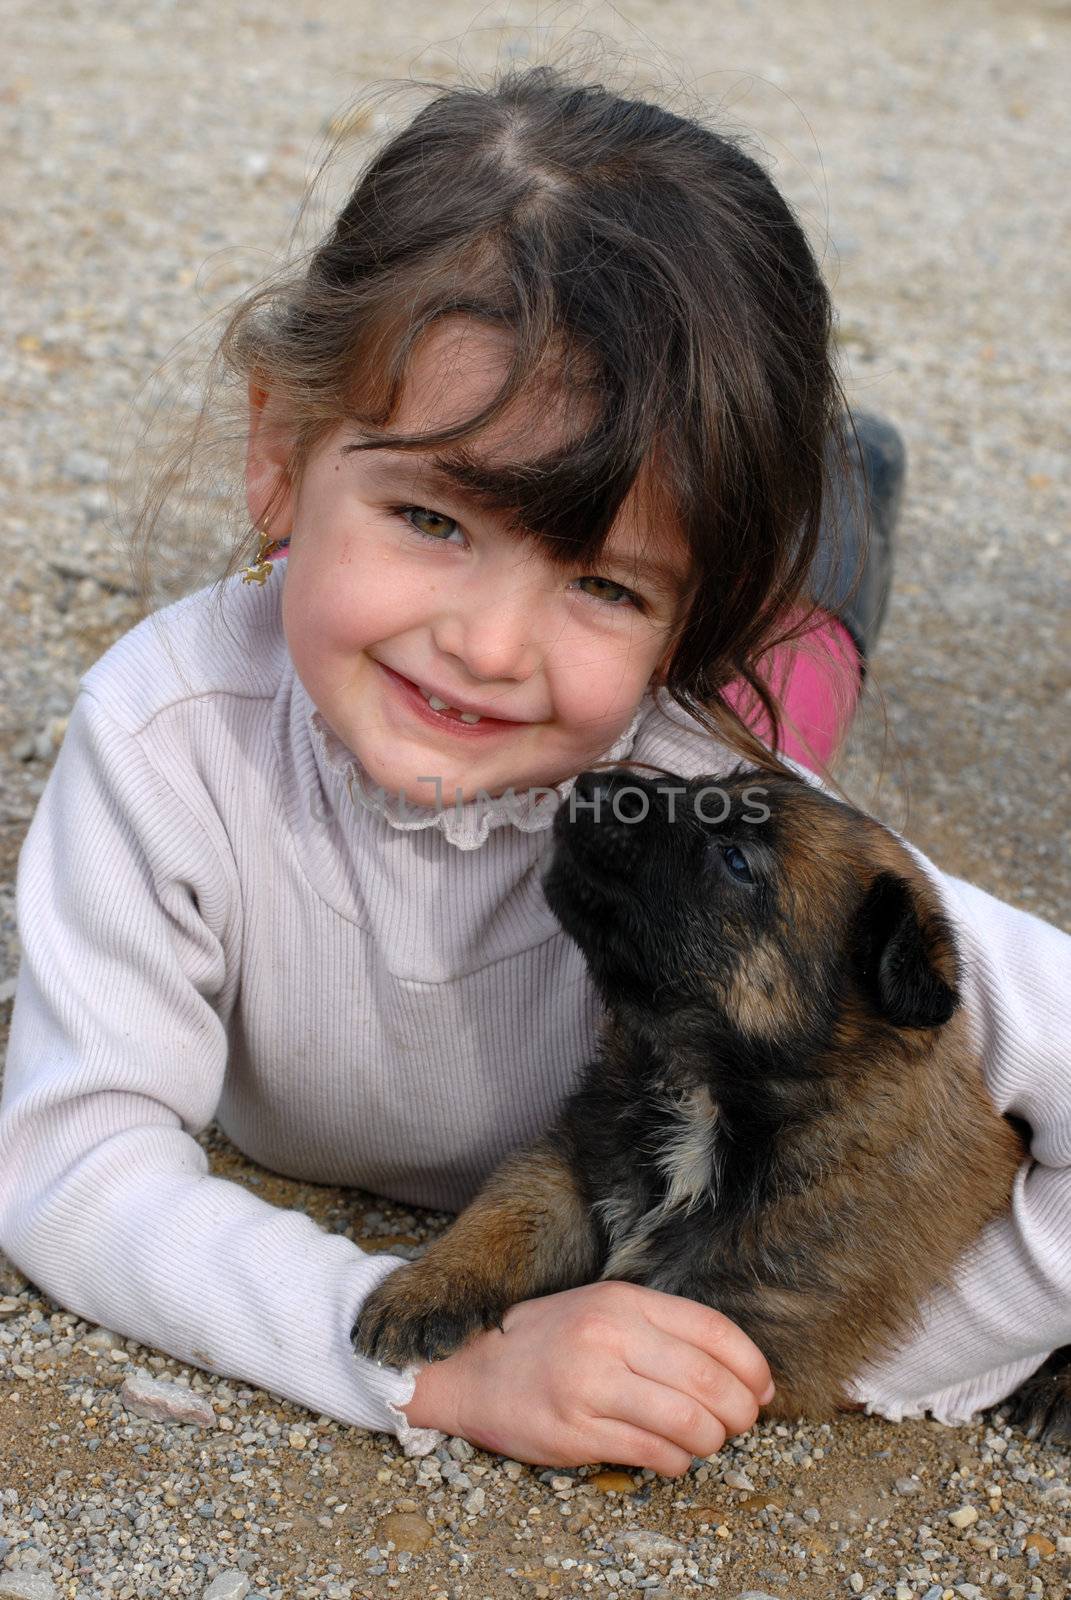 girl and puppy by cynoclub